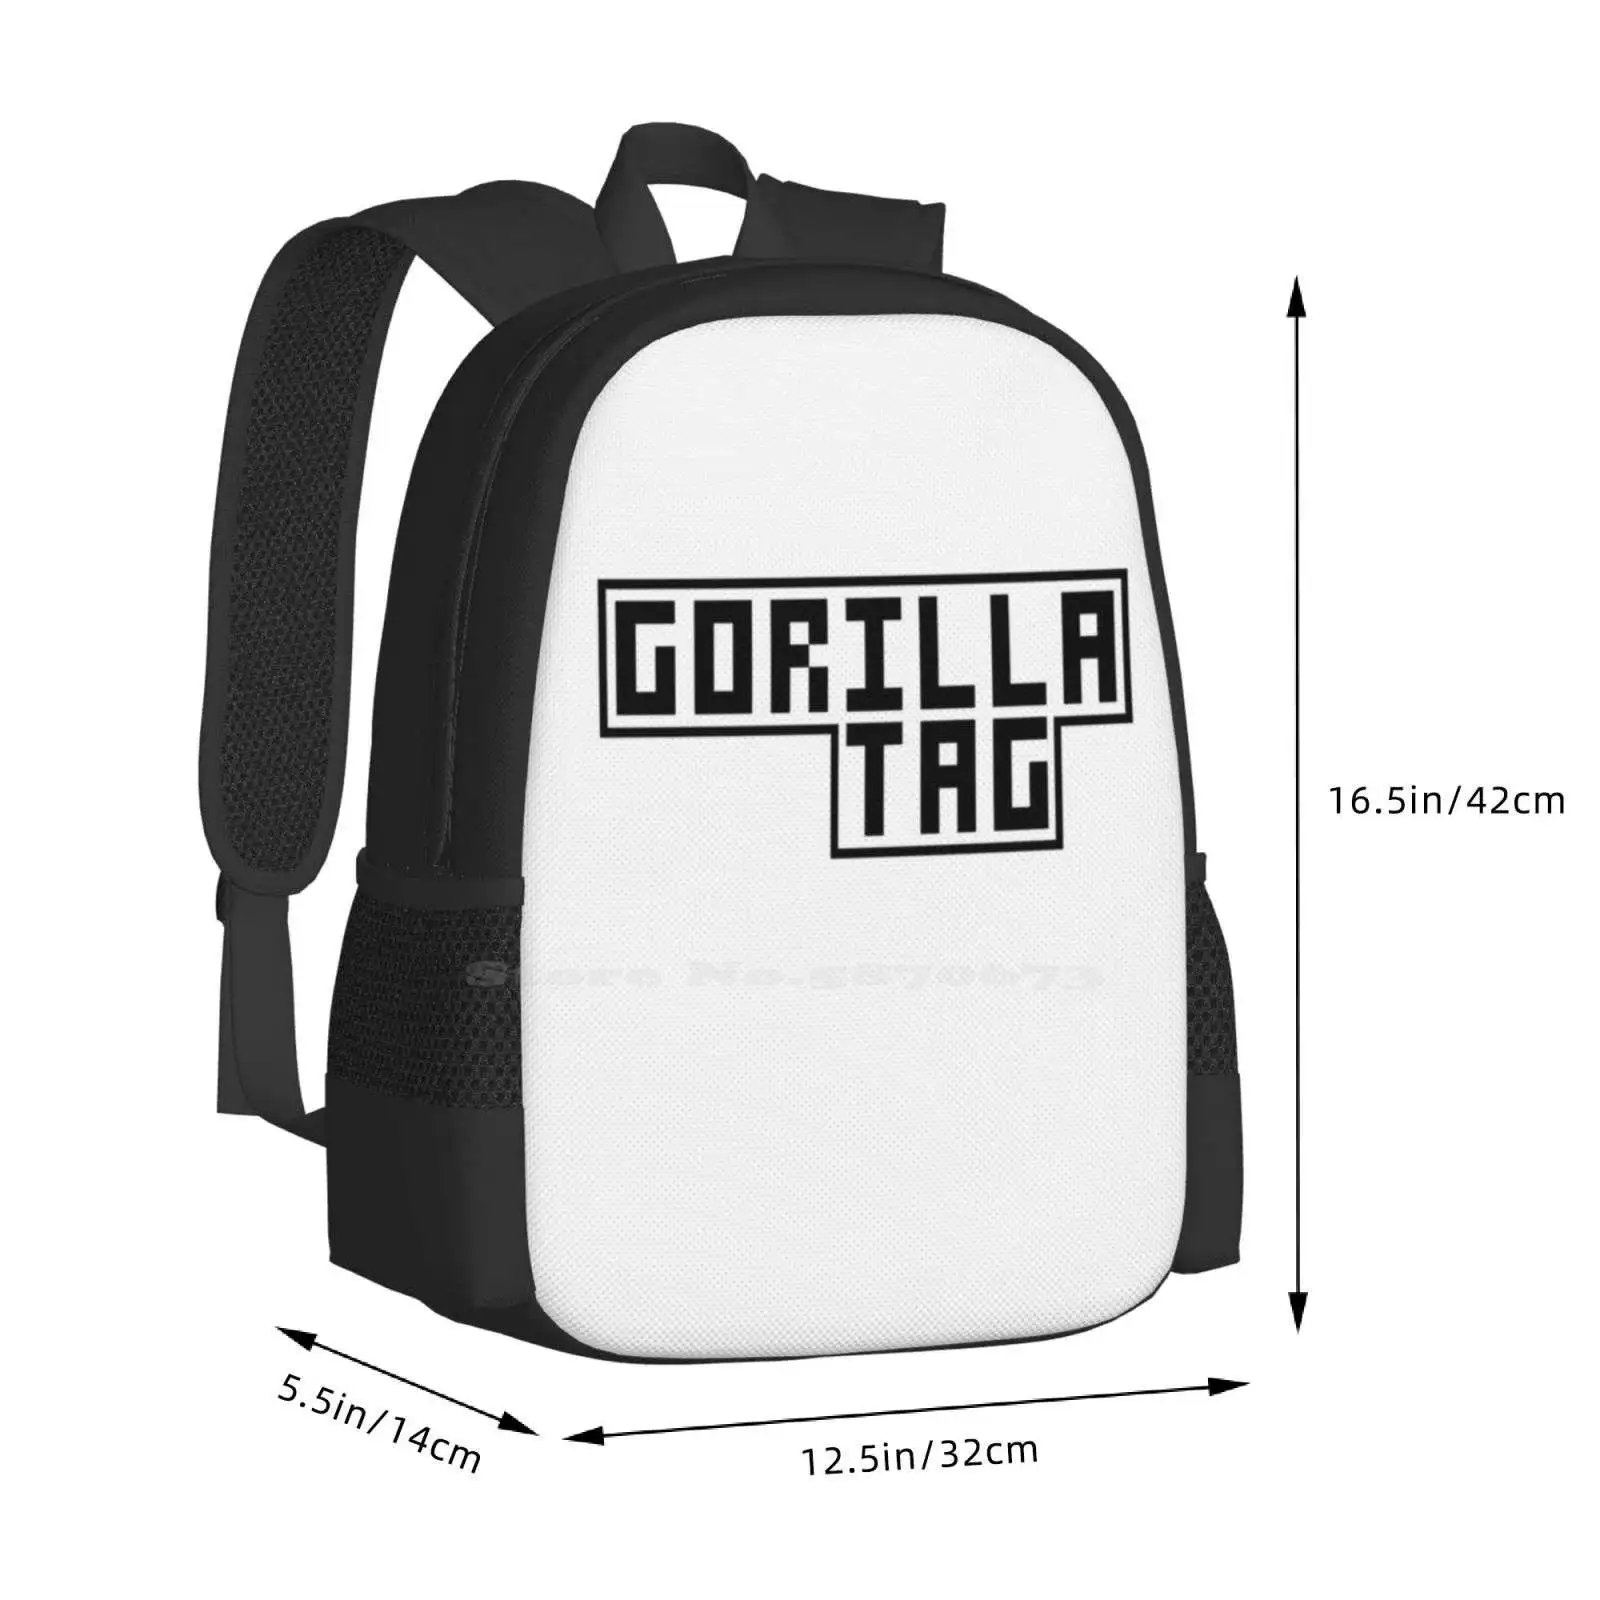 Gorilla Tag Pattern Design Bagpack School Bags Vr Monkey Gorilla